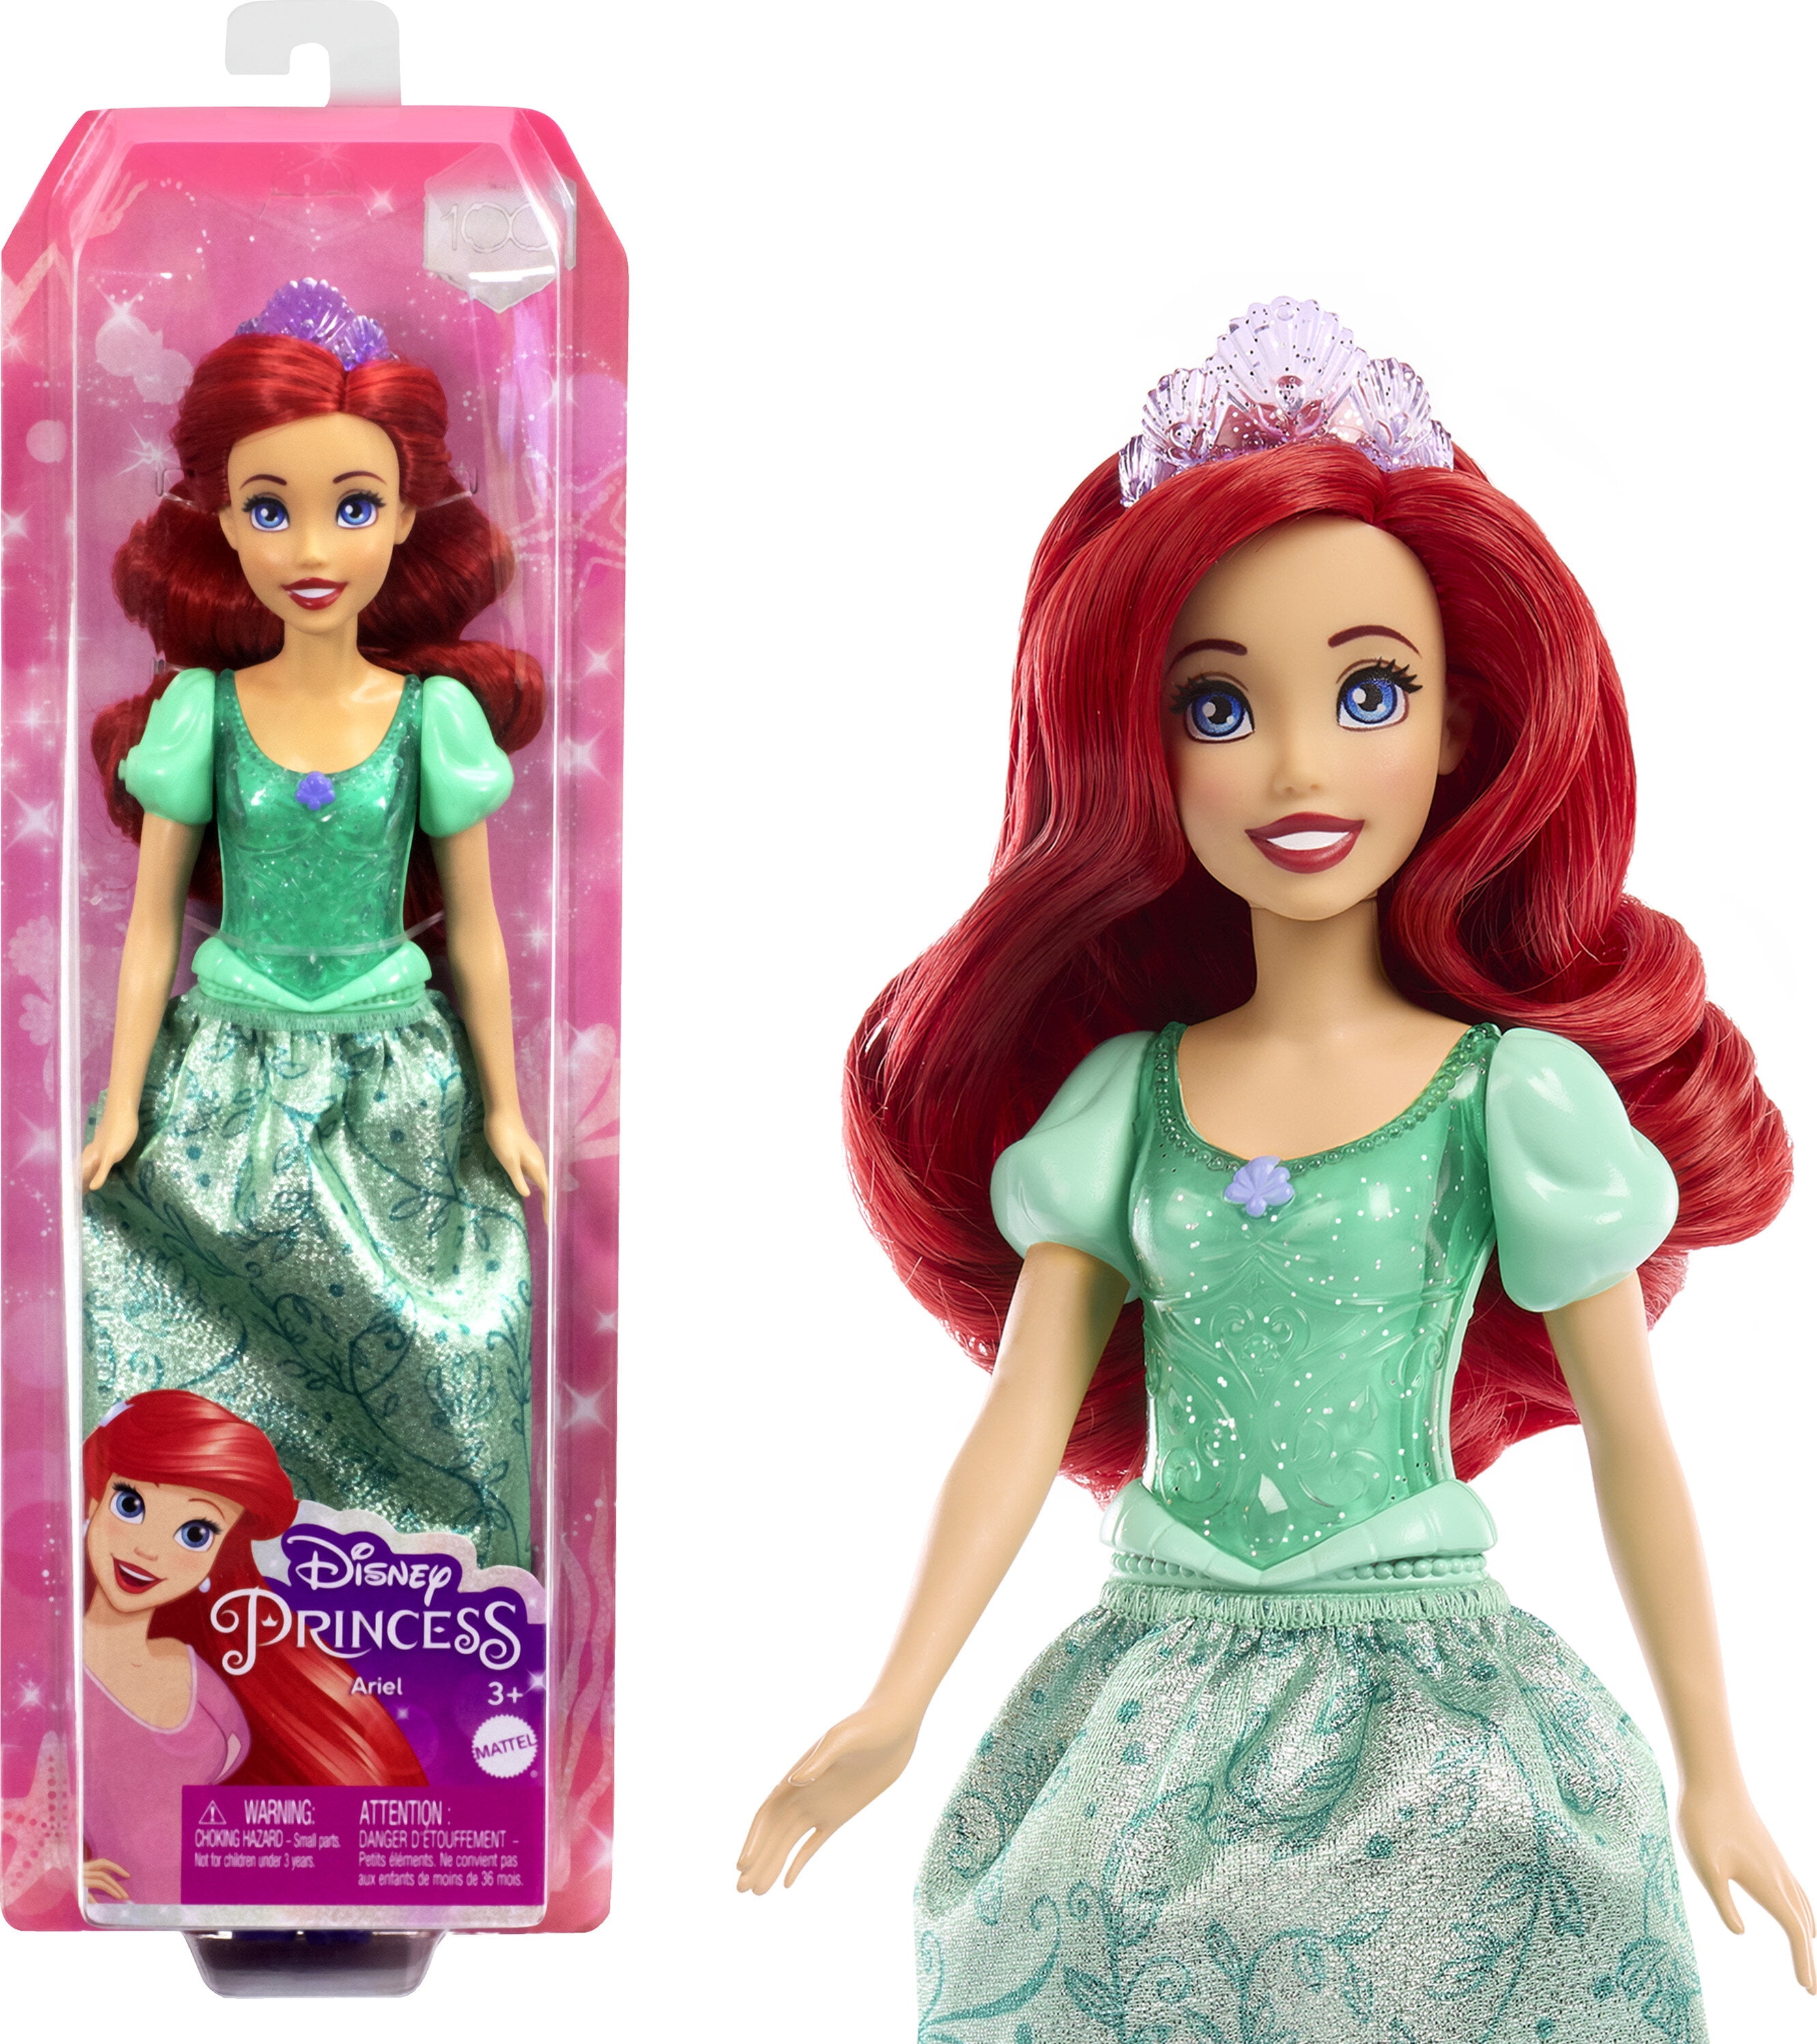 Disney Princess Ariel Fashion Doll with Red Hair, Blue Eyes & Tiara Accessory, Sparkling Look